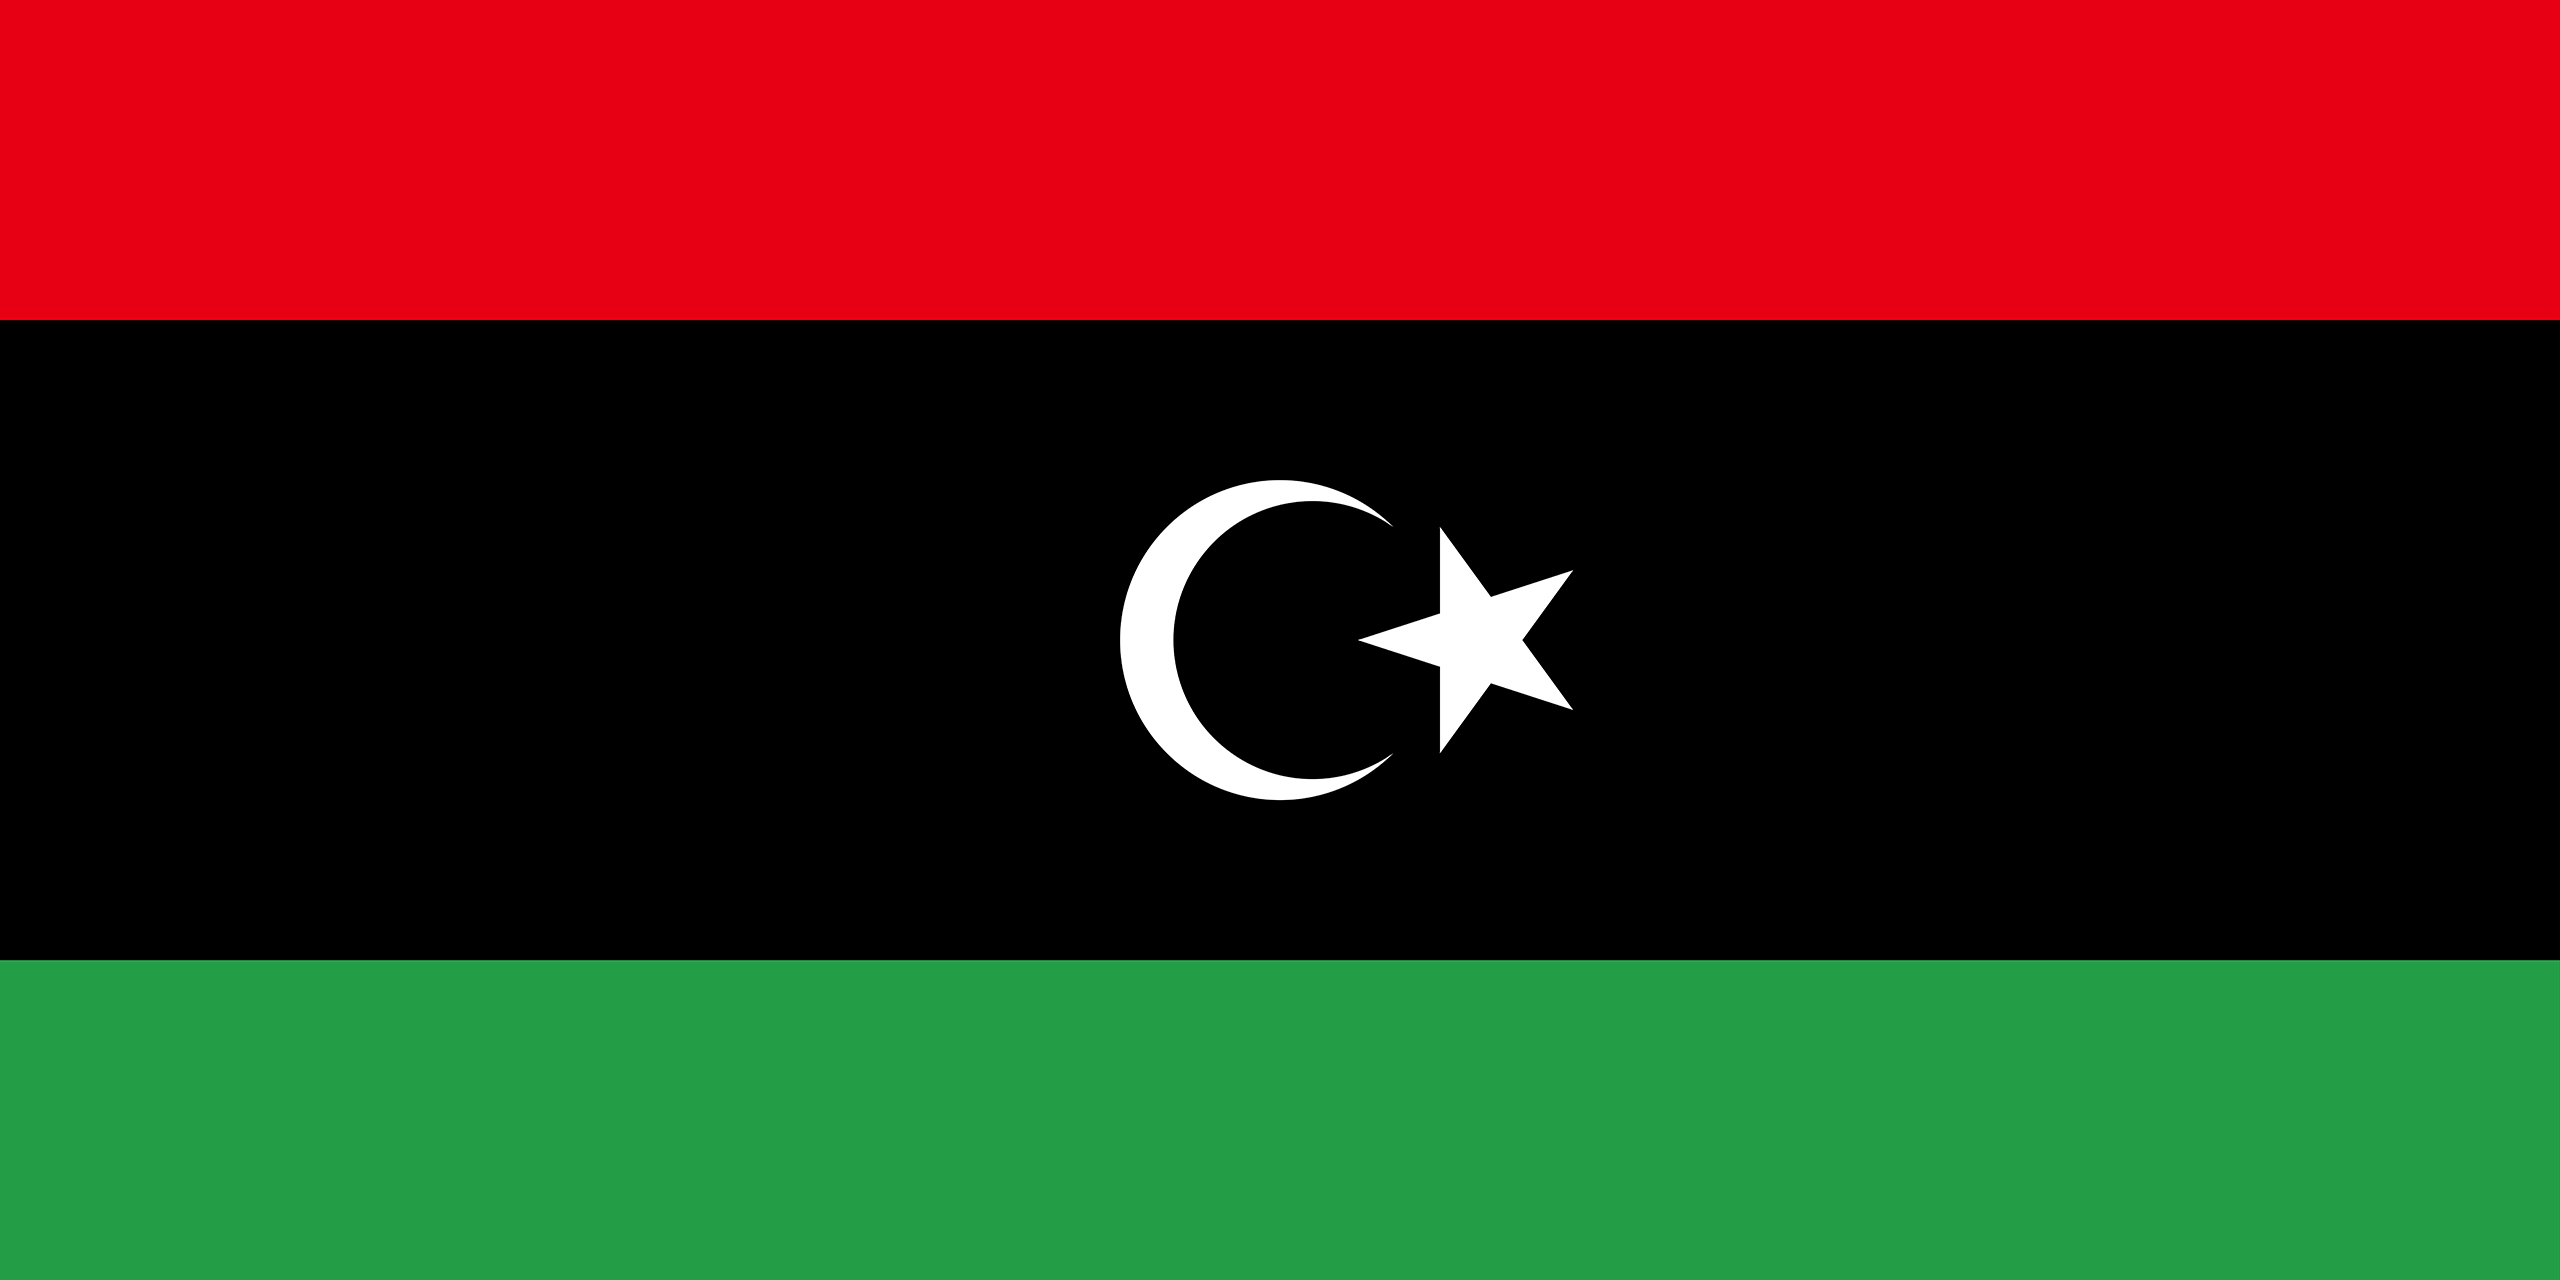 Libya's flag